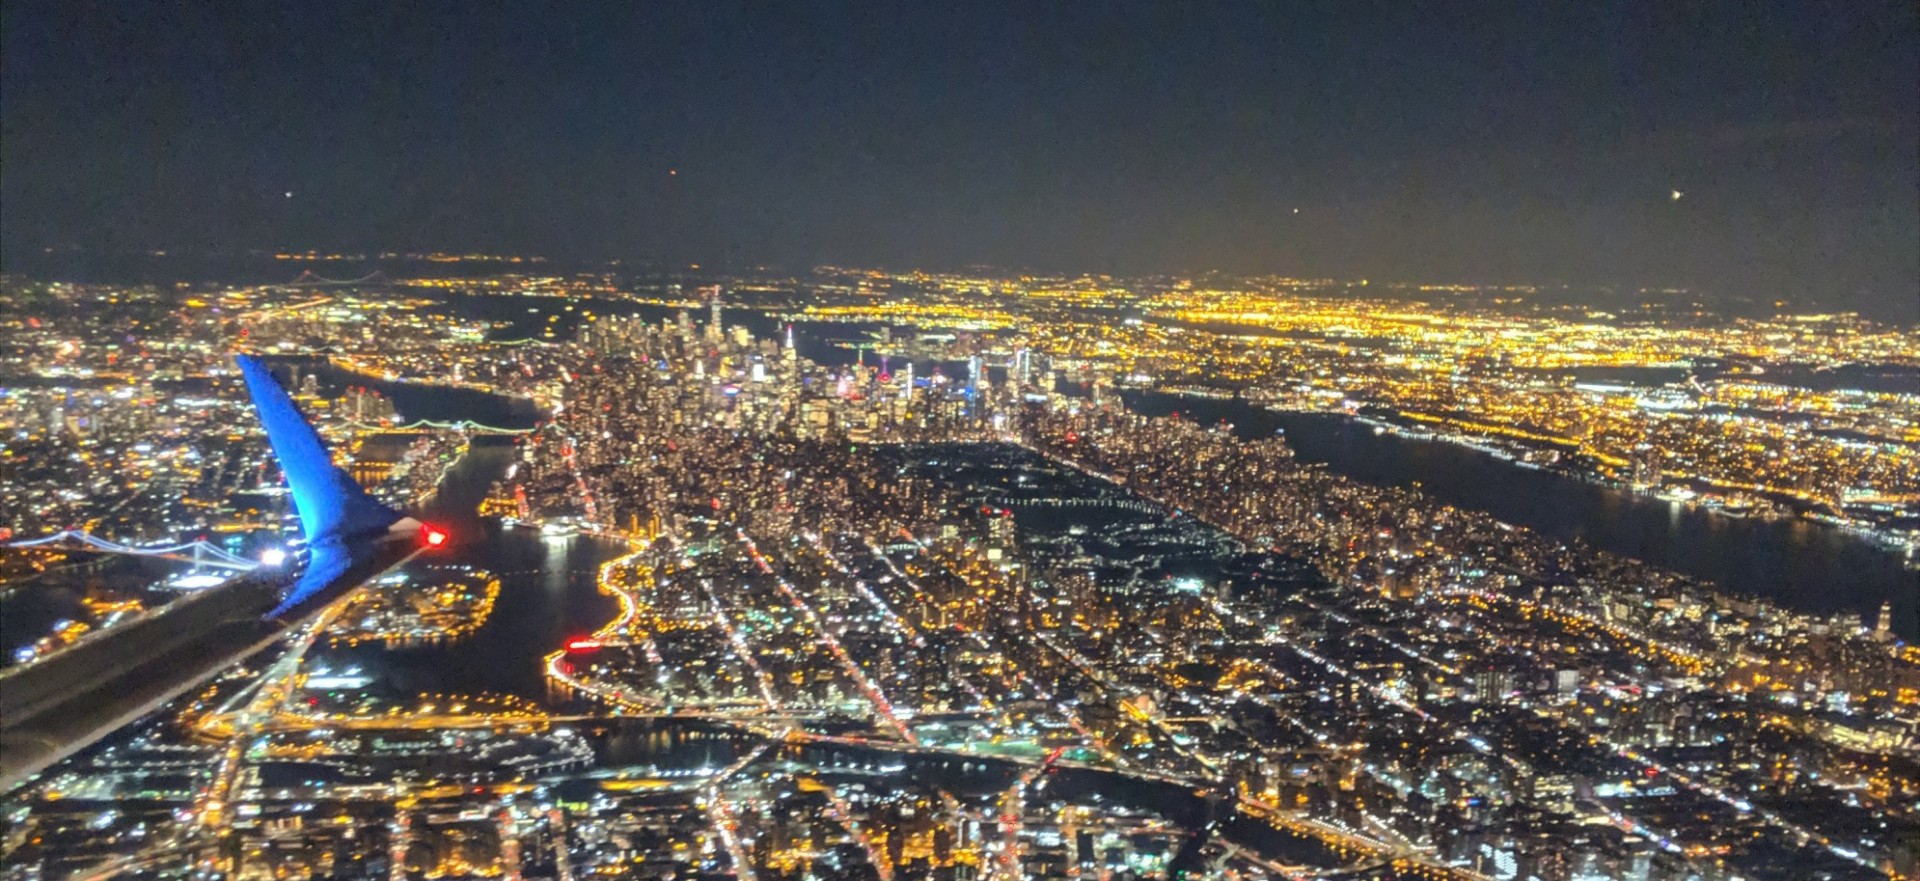 New York City night lights from an aircraft